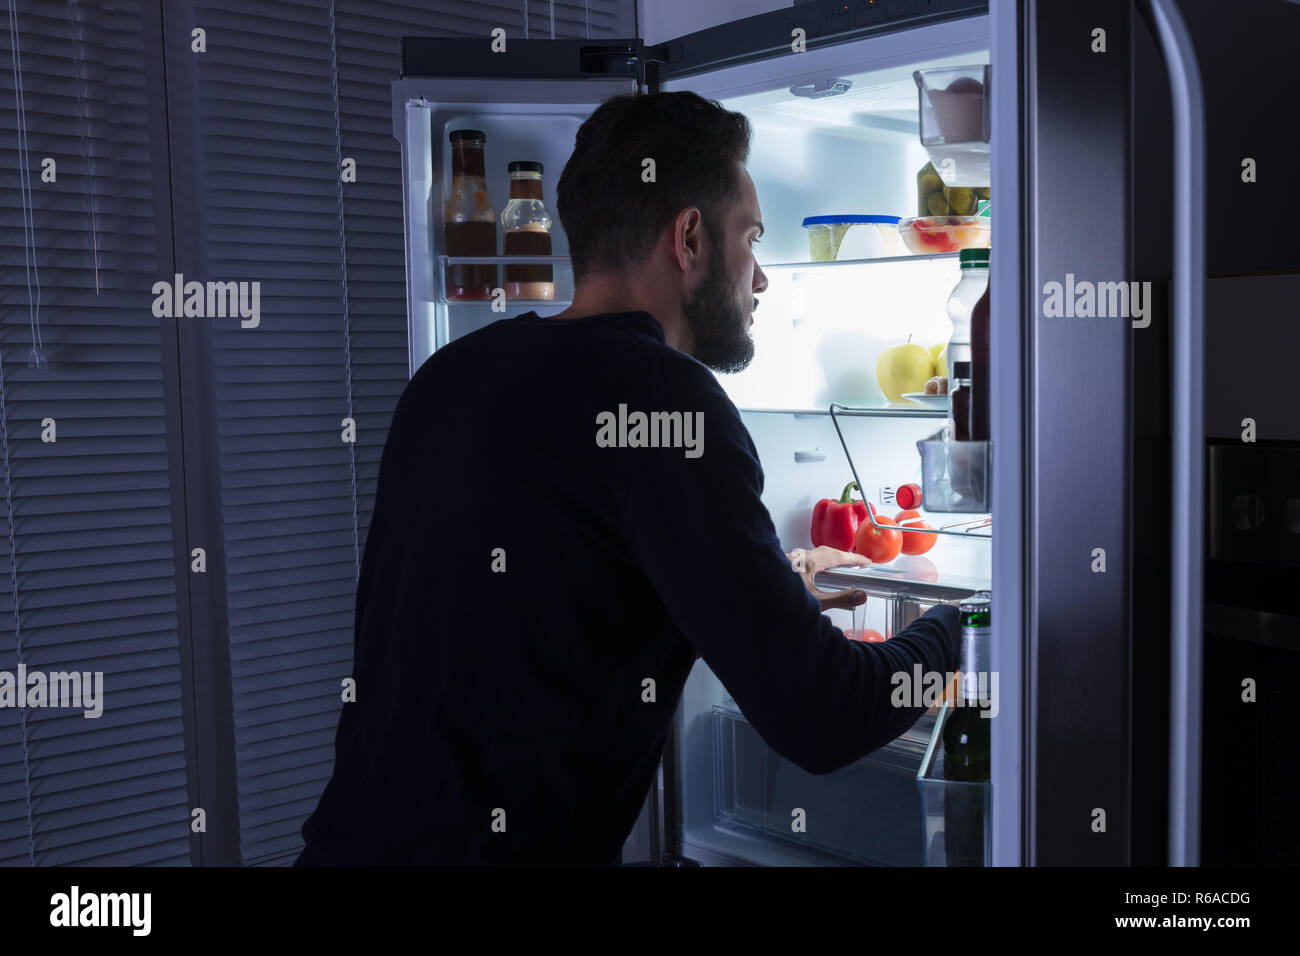 Man Looking At Food Kept In Refrigerator Stock Photo